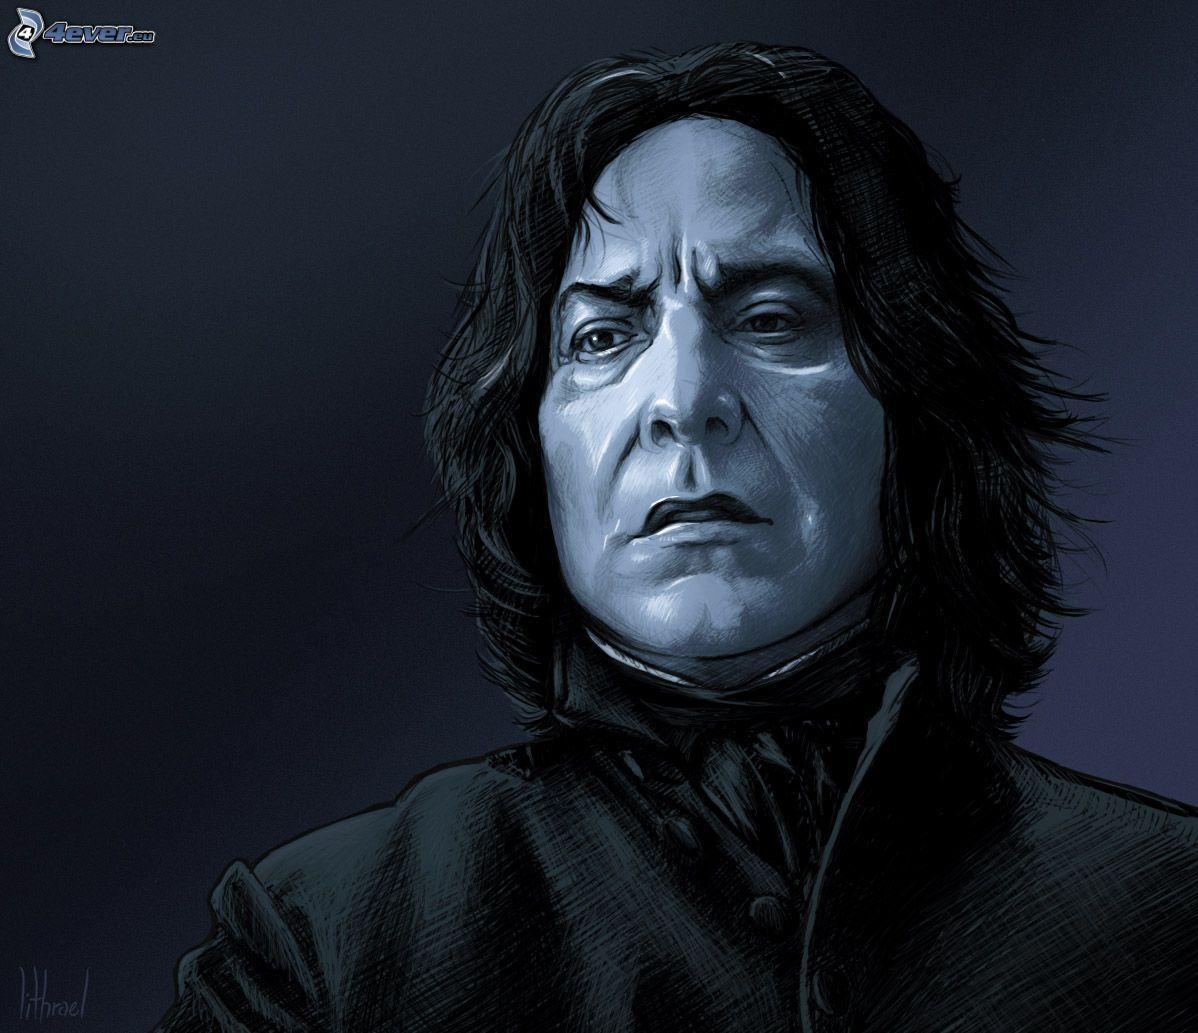 Professor Severus Snape Wallpapers 68 pictures